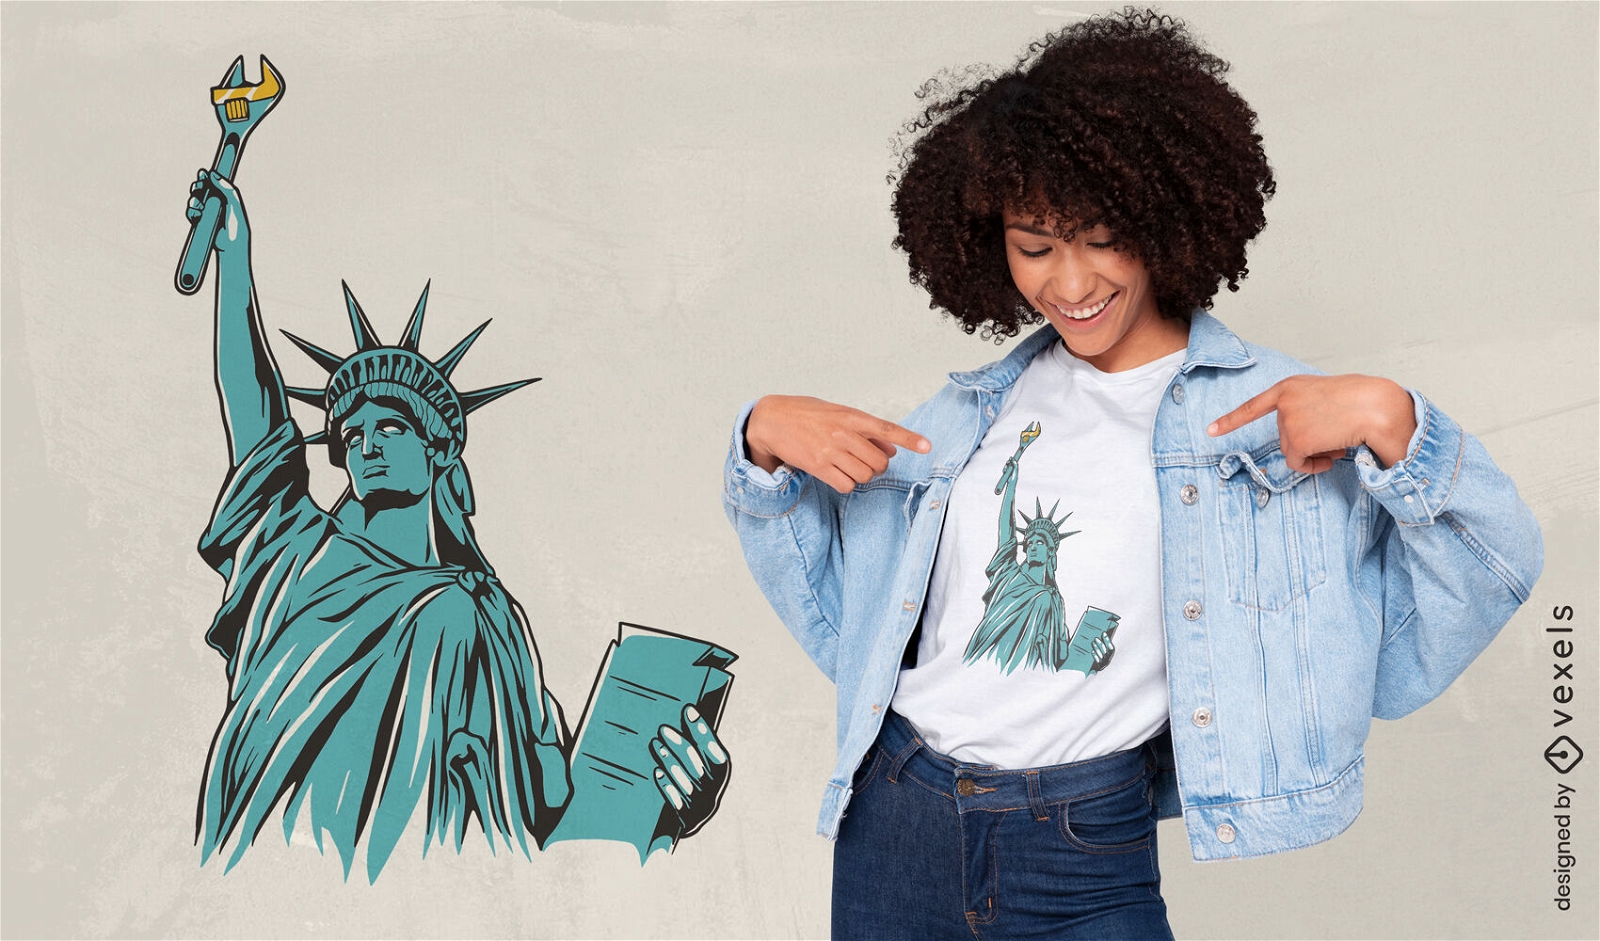 Statue of liberty mechanic joke t-shirt design